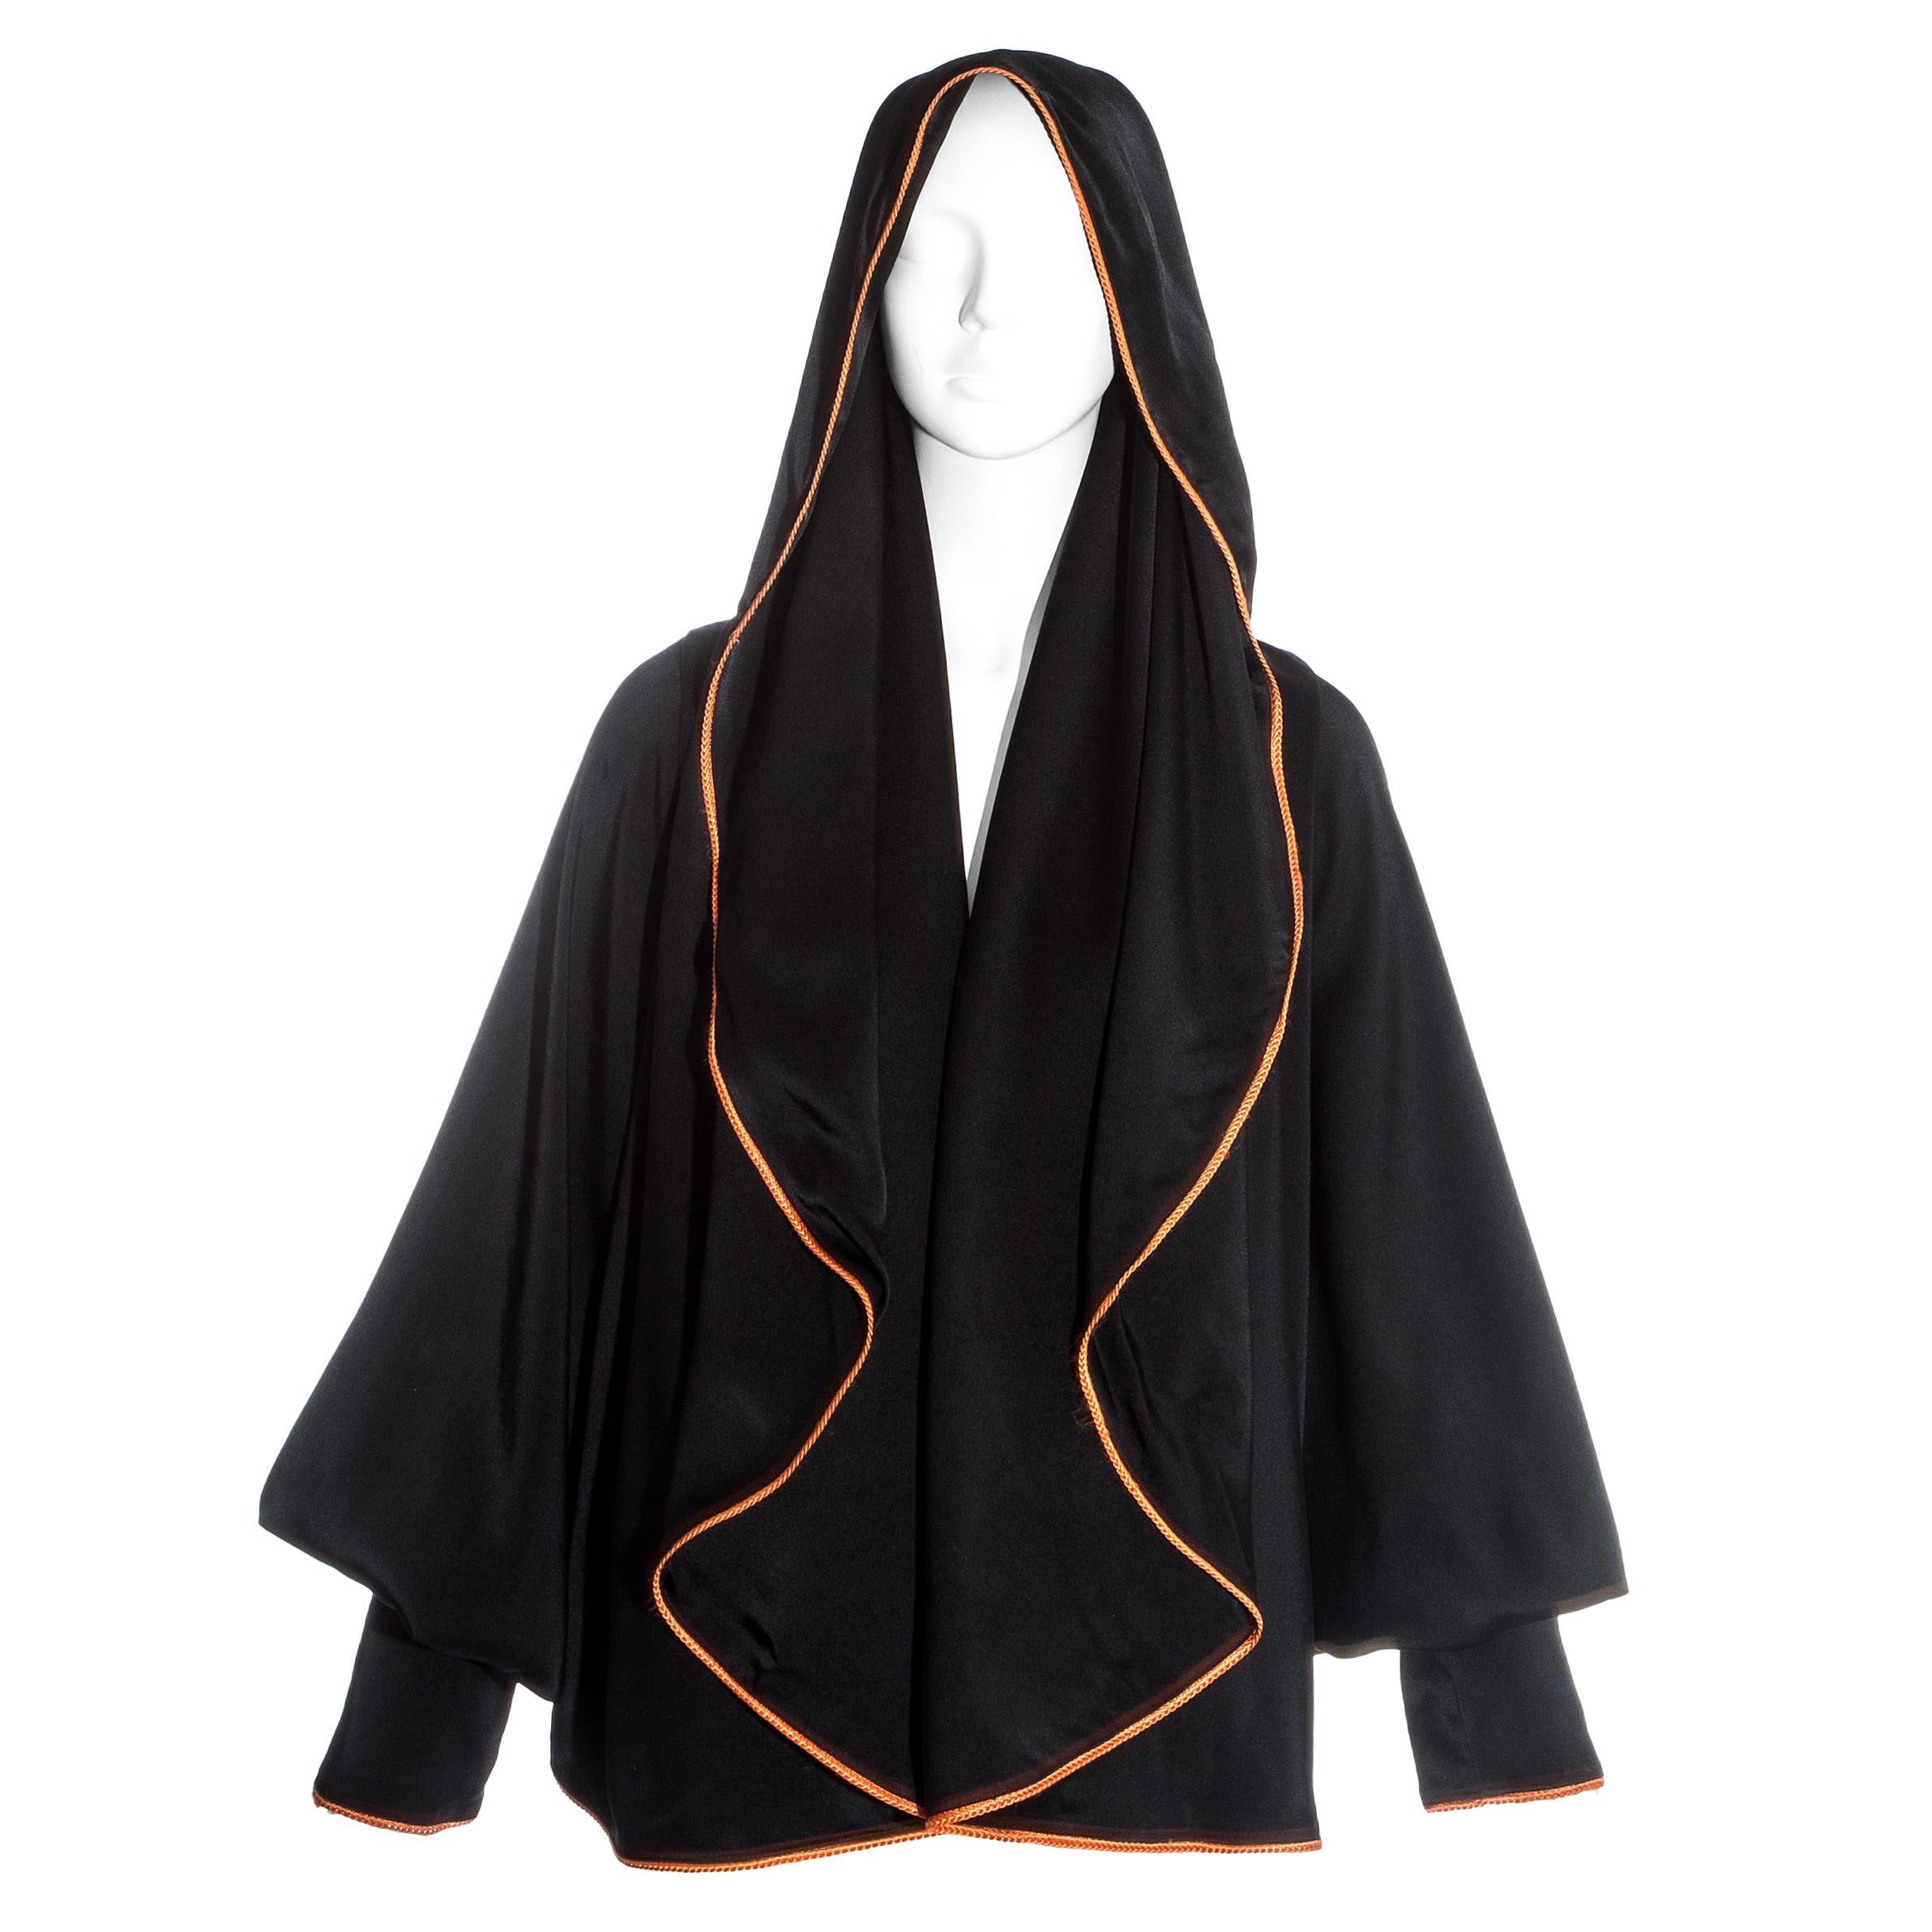 Vivienne Westwood black satin hooded bolero jacket with orange trim, ss 1993